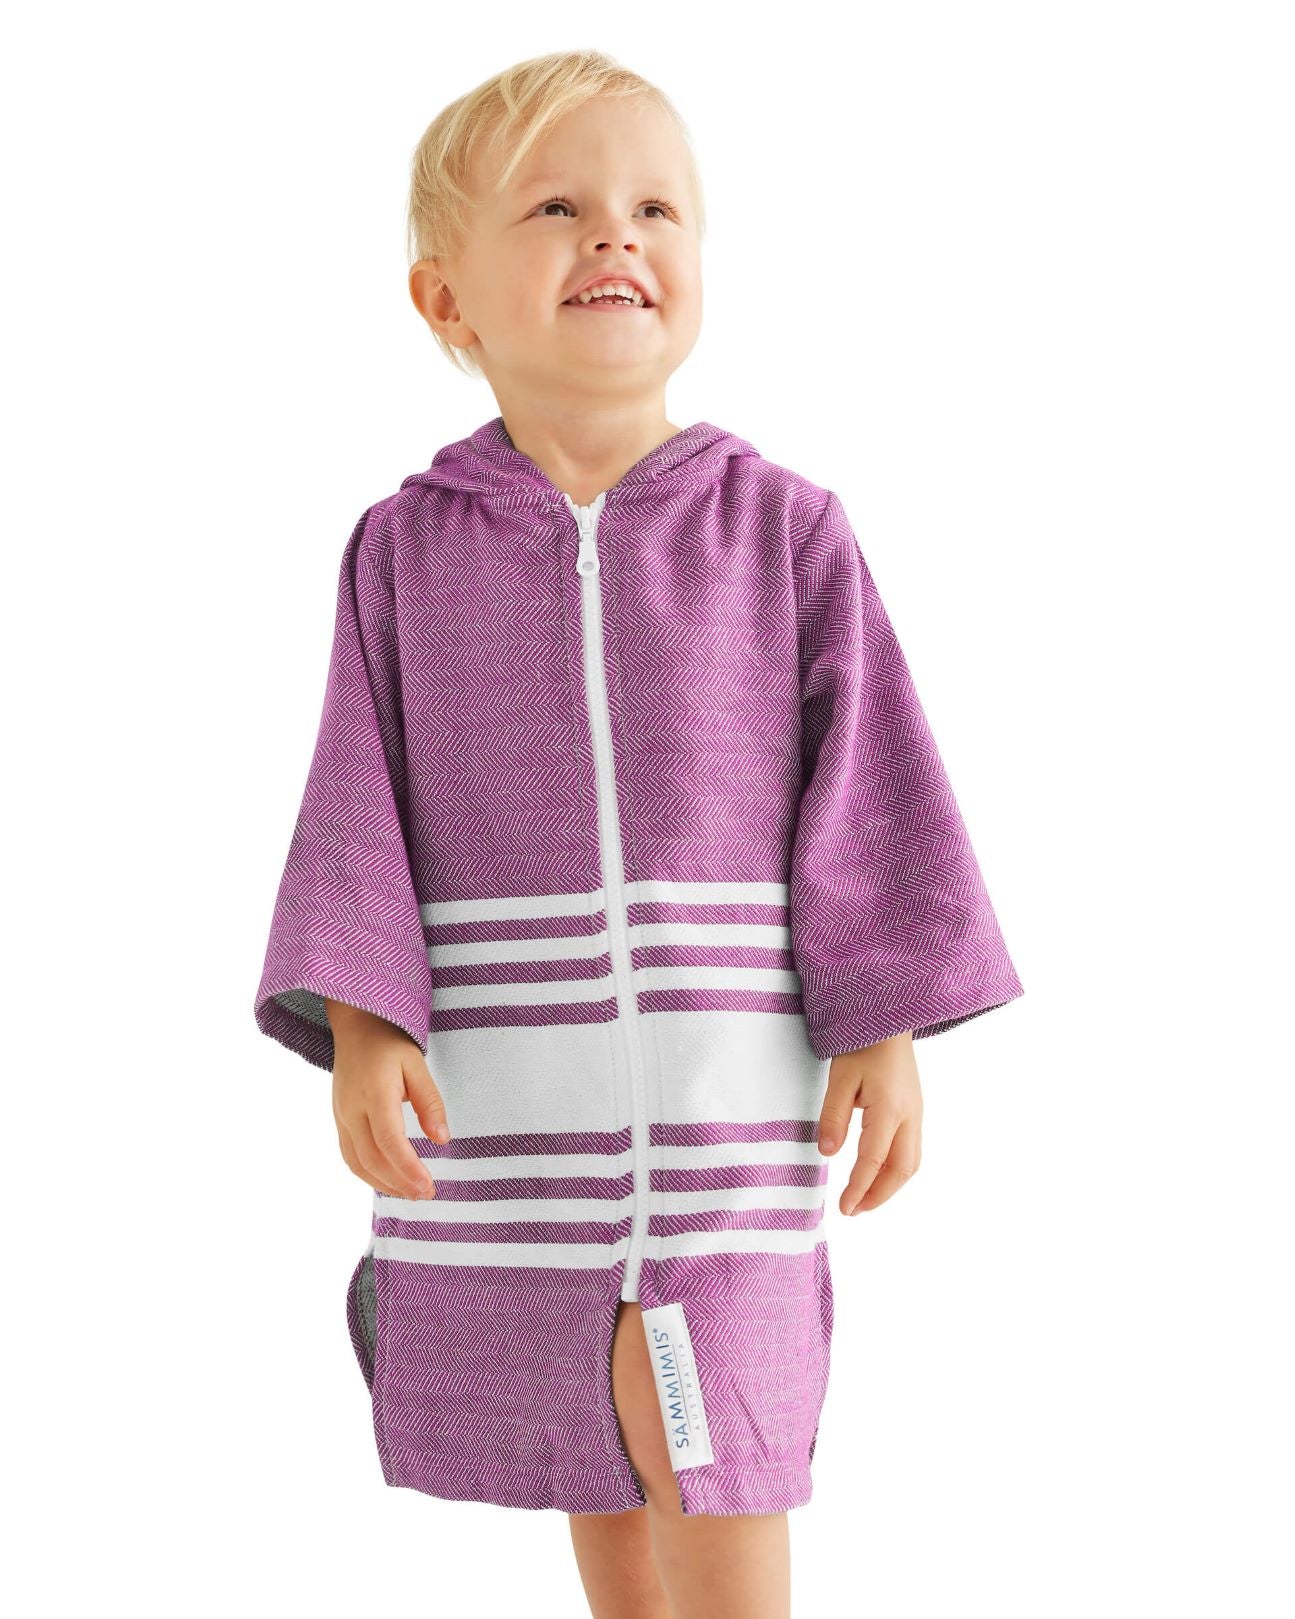 TASSOS Baby Hooded Towel: Purple/White